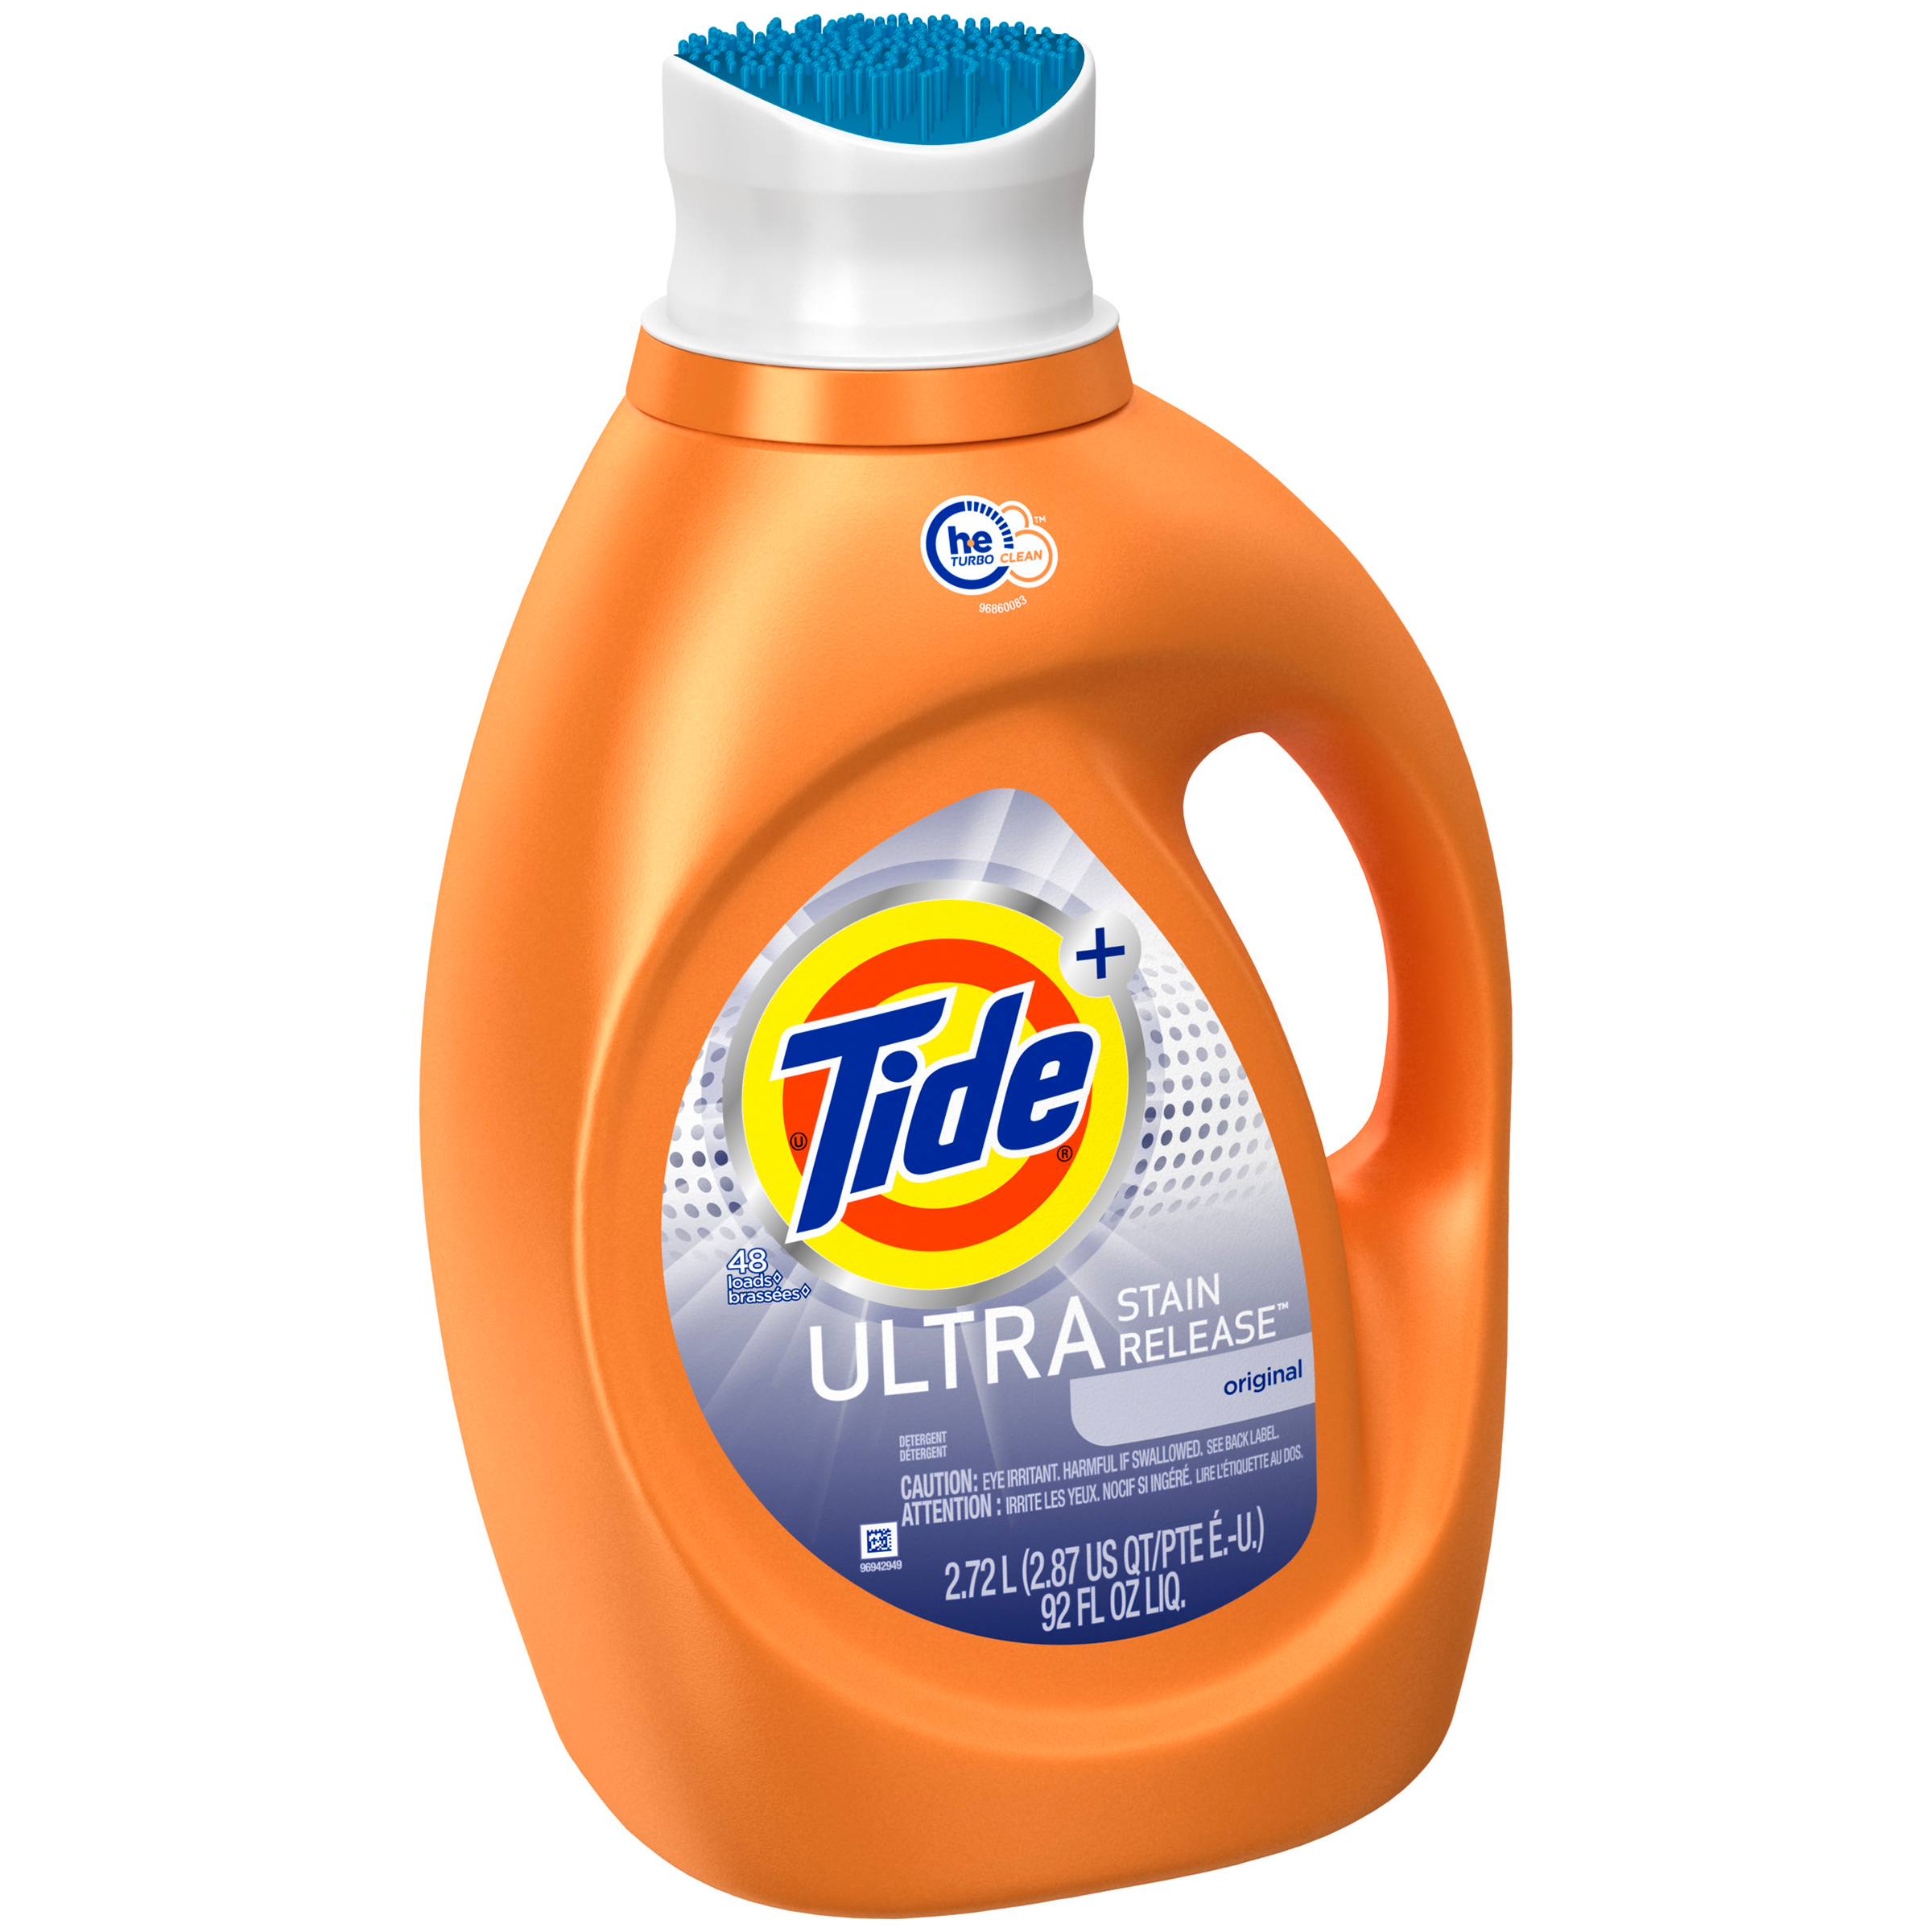 Tide Plus Ultra Stain Release HE Liquid Laundry Detergent, Original Scent, 92 fl oz